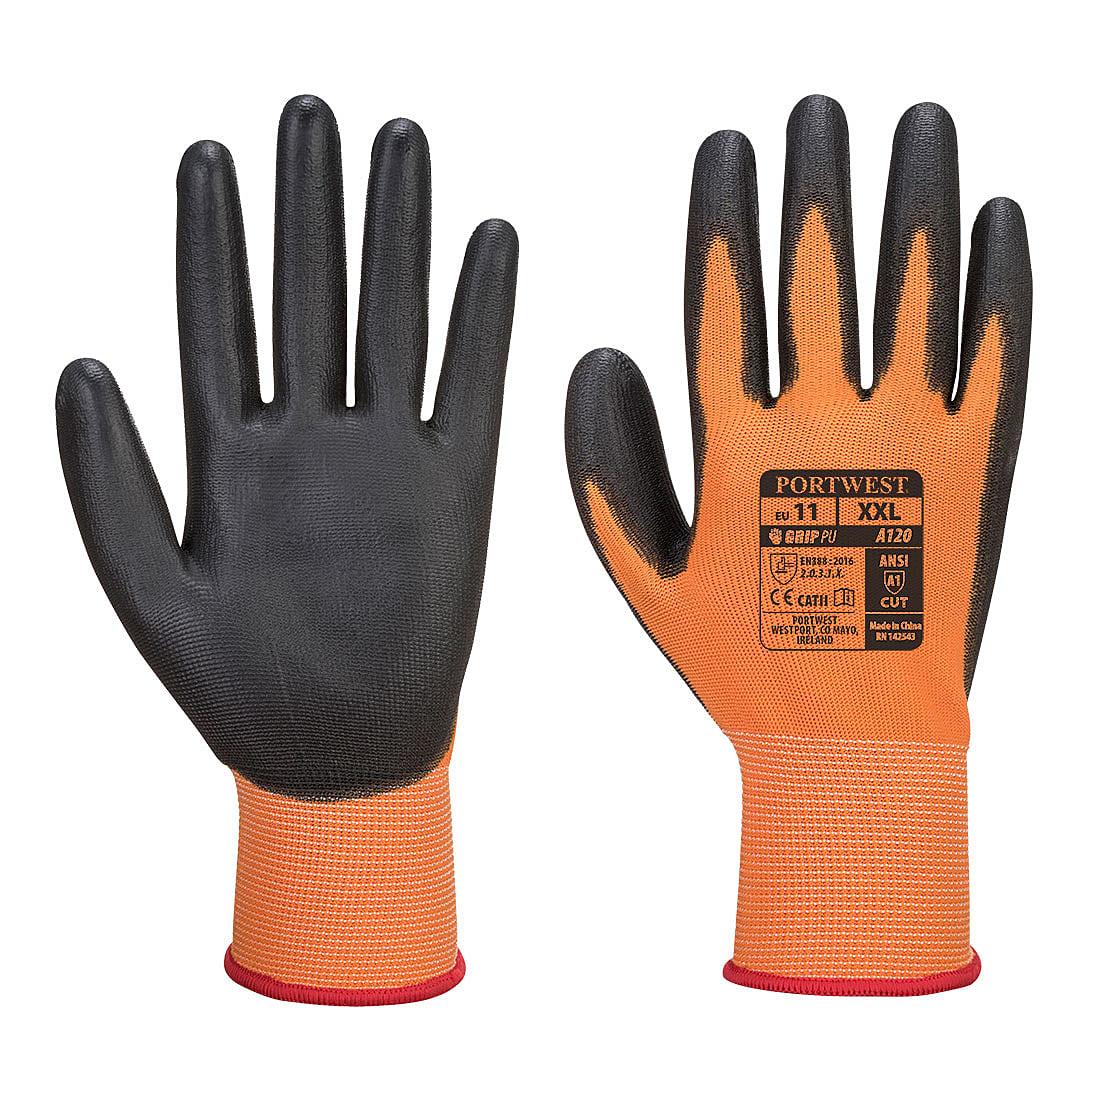 Portwest PU Palm Gloves in Orange / Black (Product Code: A120)